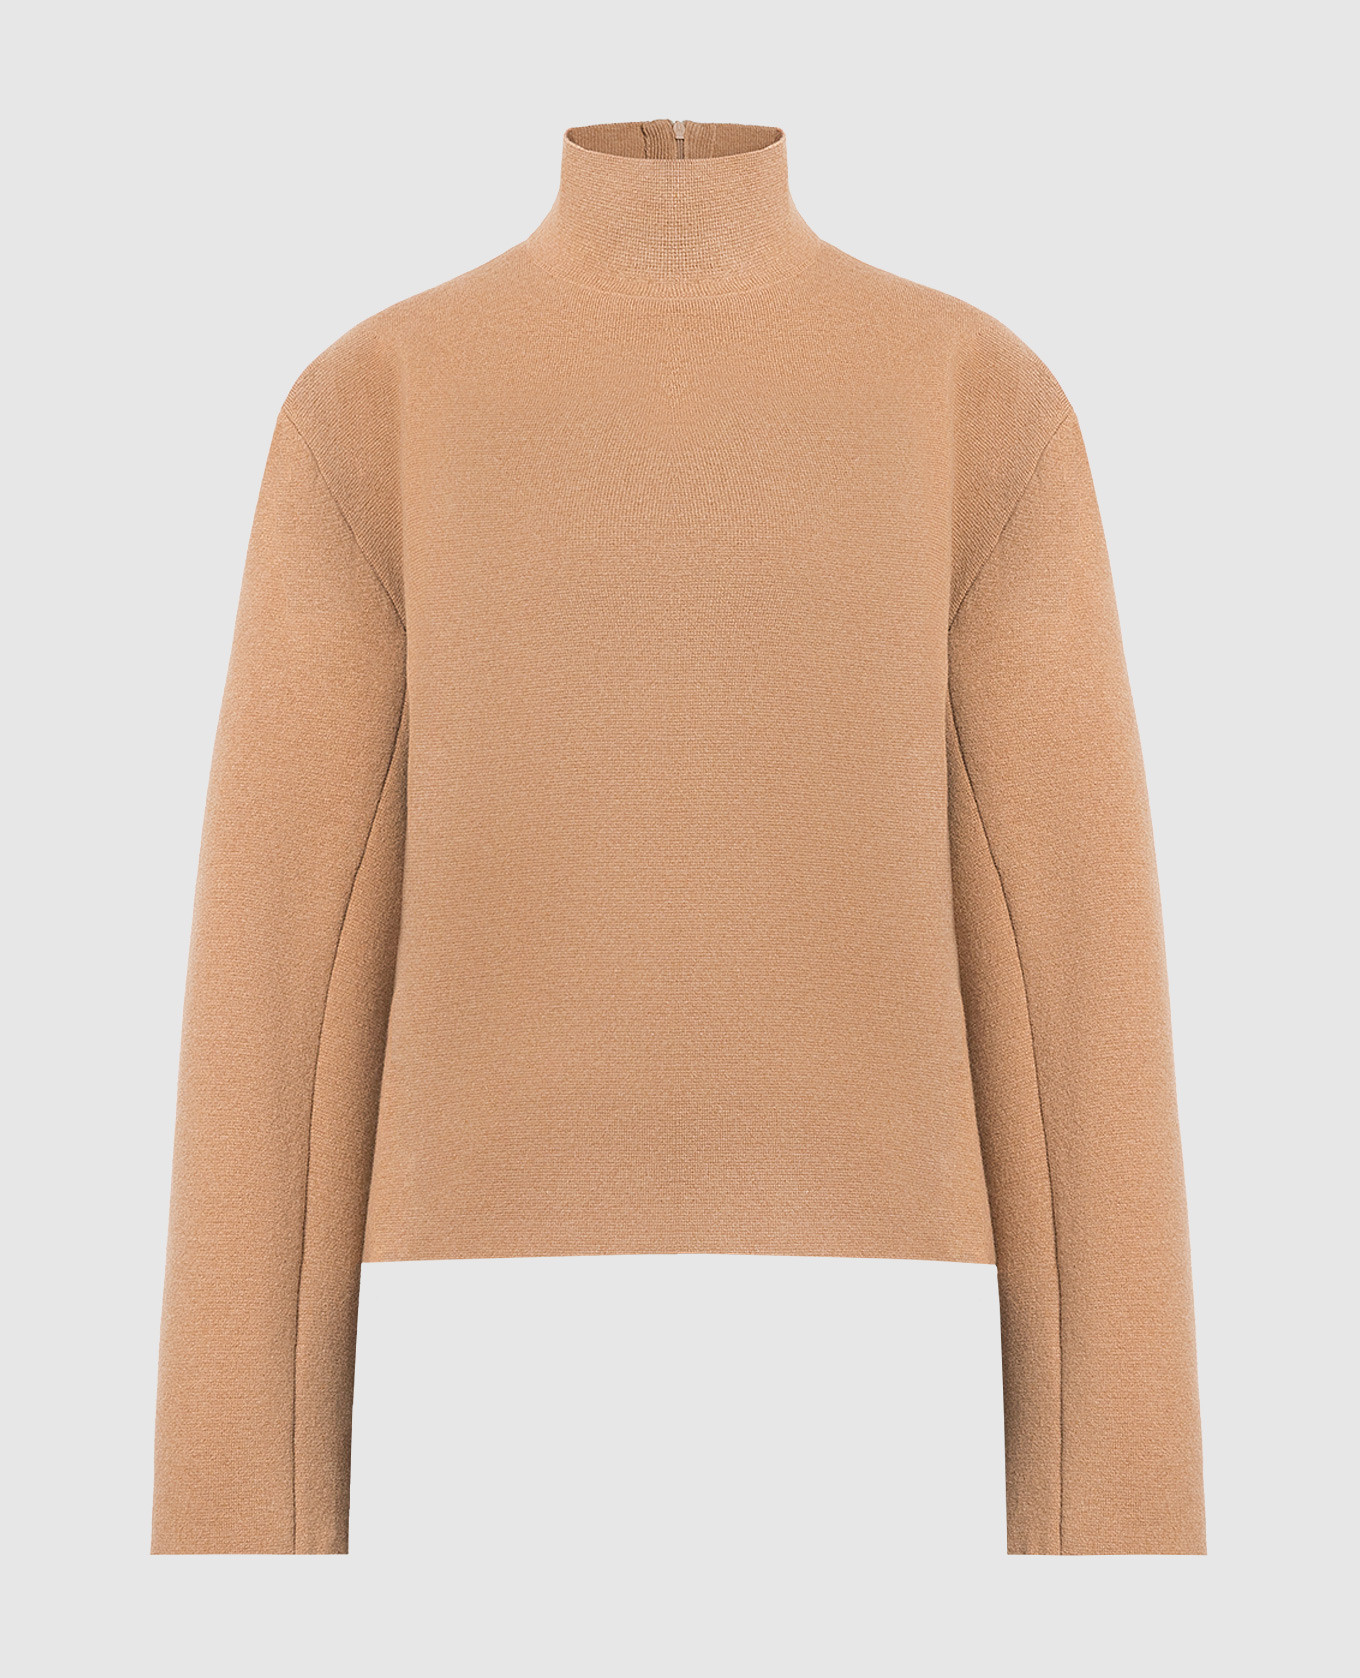 Delara cashmere sweater in brown